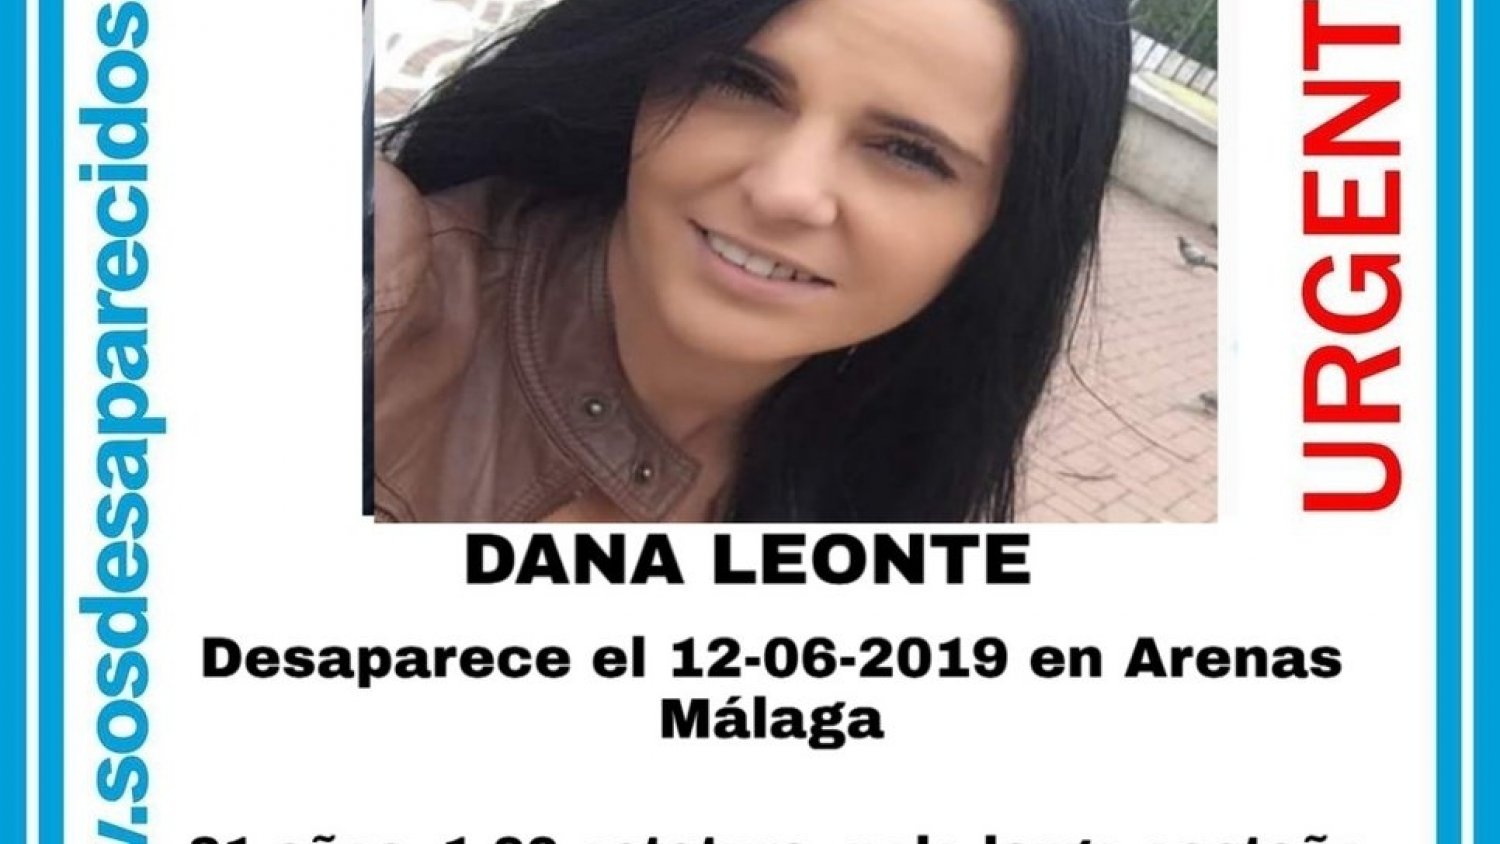 Continúa en paradero desconocido Dana Leonte, la joven residente del municipio malagueño Arenas